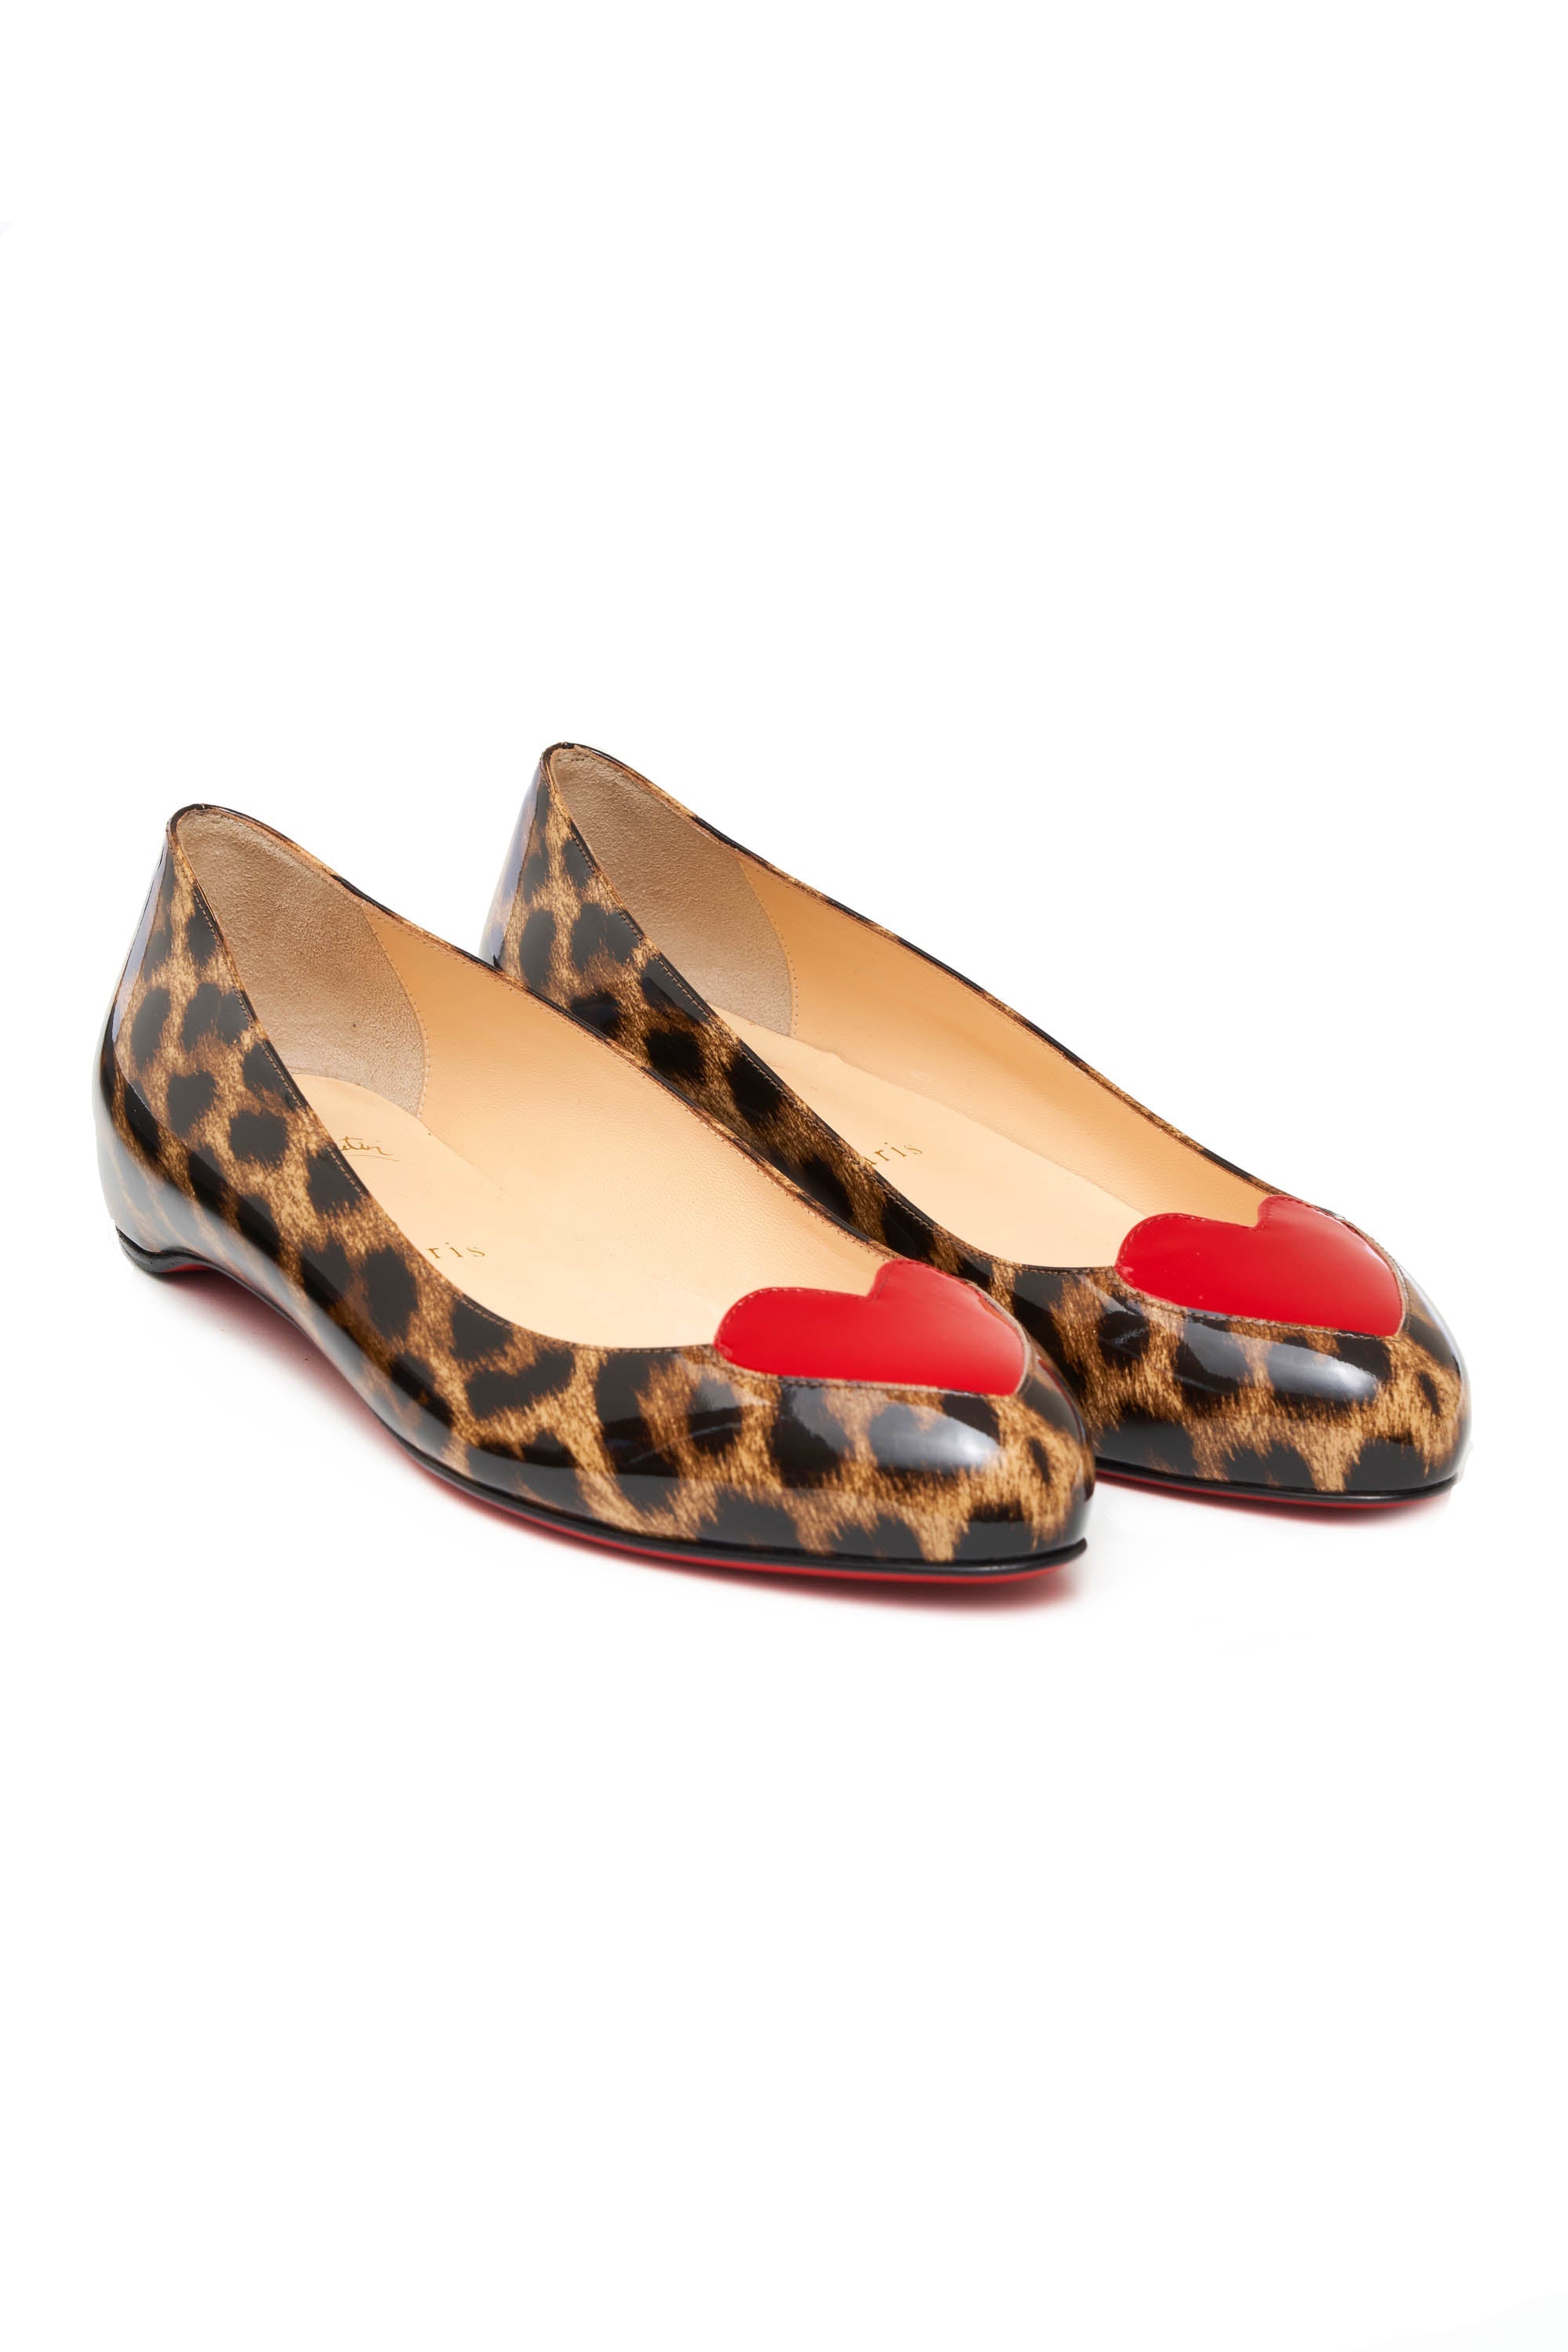 Christian Louboutin Leopard Point Toe Flats w/ Heart Shoes Size 36 - Foxy Couture Carmel